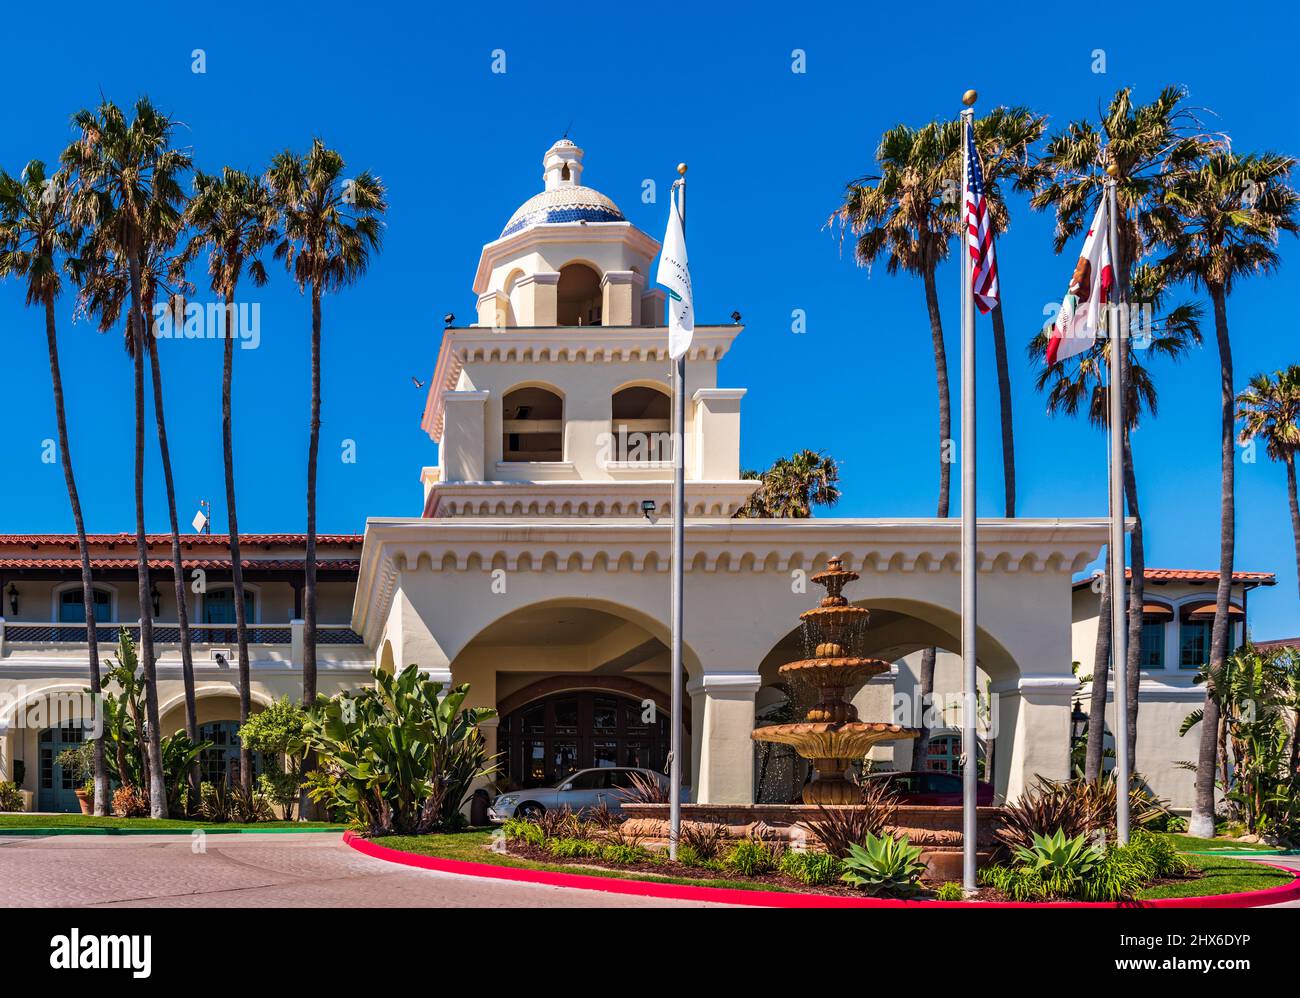 Oxnard, CA /USA - 5. April 2016: Haupteingang des Embassy Suites Hilton Mandalay Beach Resort Hotels in Oxnard, Kalifornien. Stockfoto